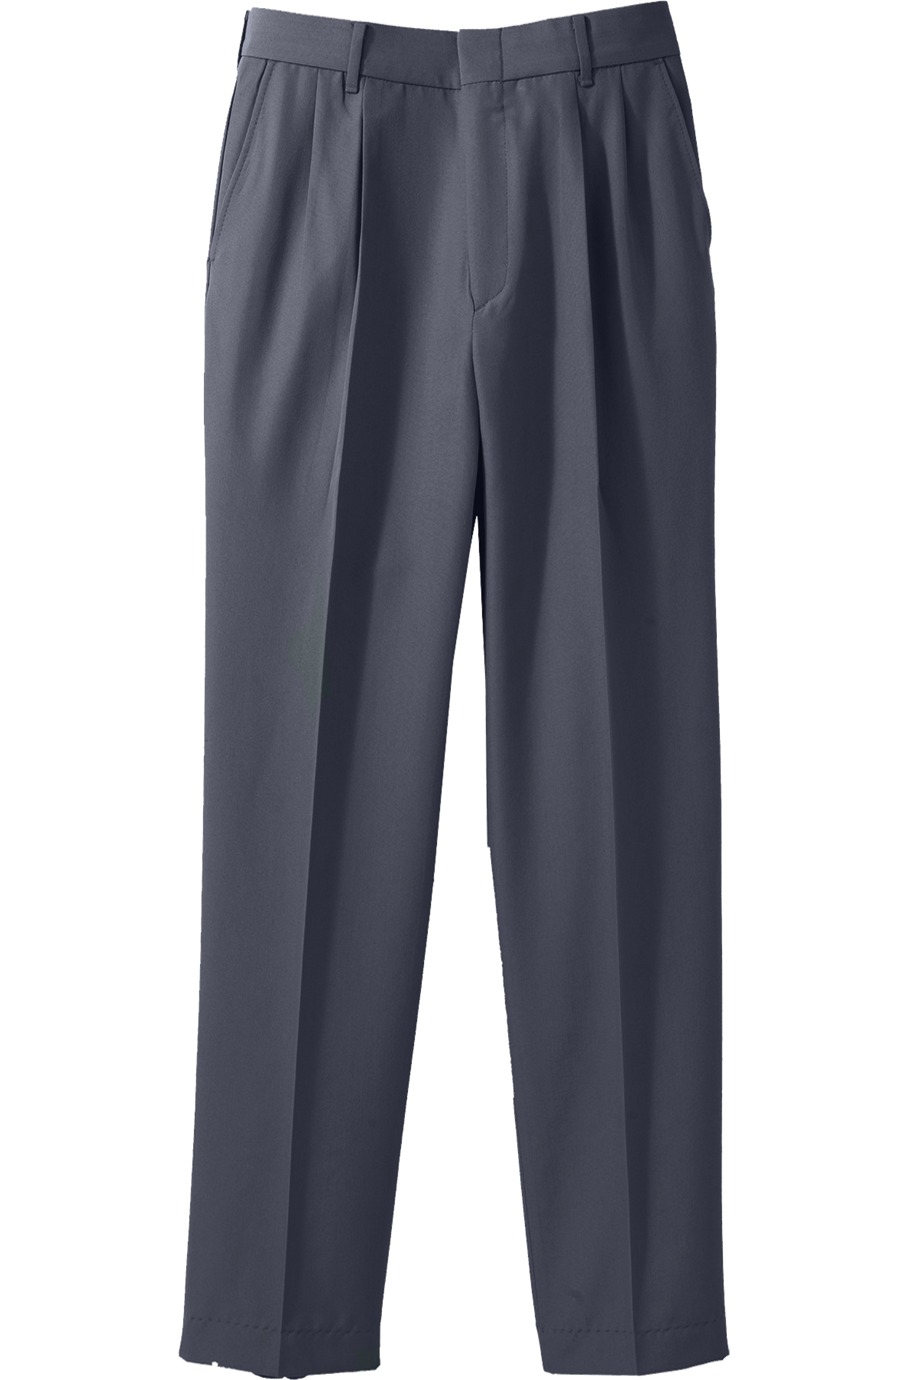 Edwards Garment 2620 - Men's Washable Wool Blend Pleated Pant